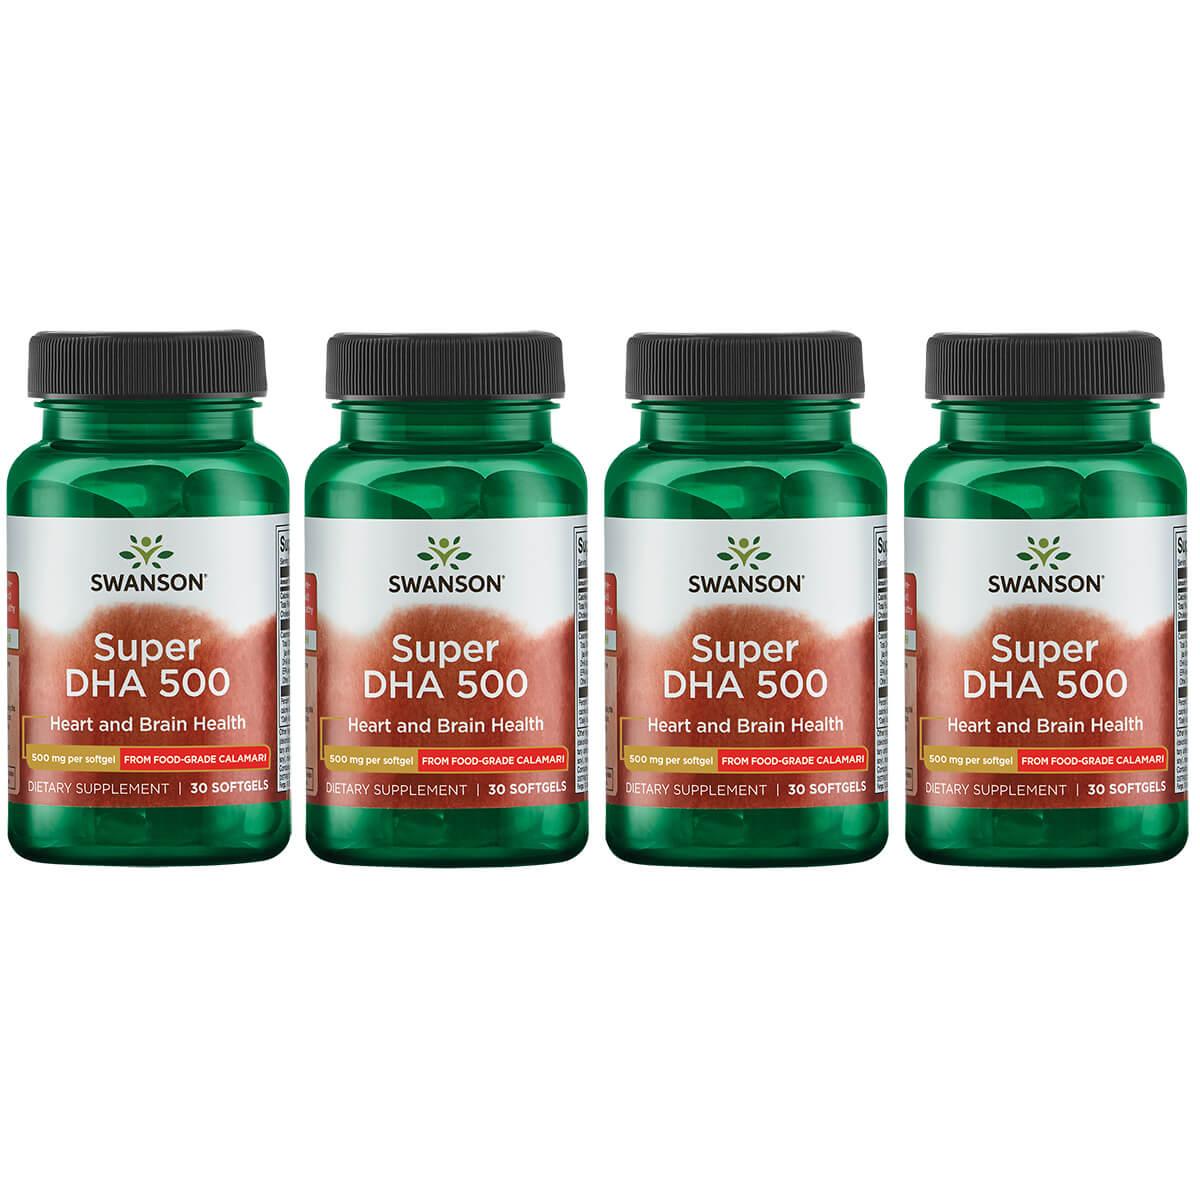 Swanson EFAs Super Dha 500 from Food-Grade Calamari 4 Pack Supplement Vitamin 500 mg 30 Soft Gels